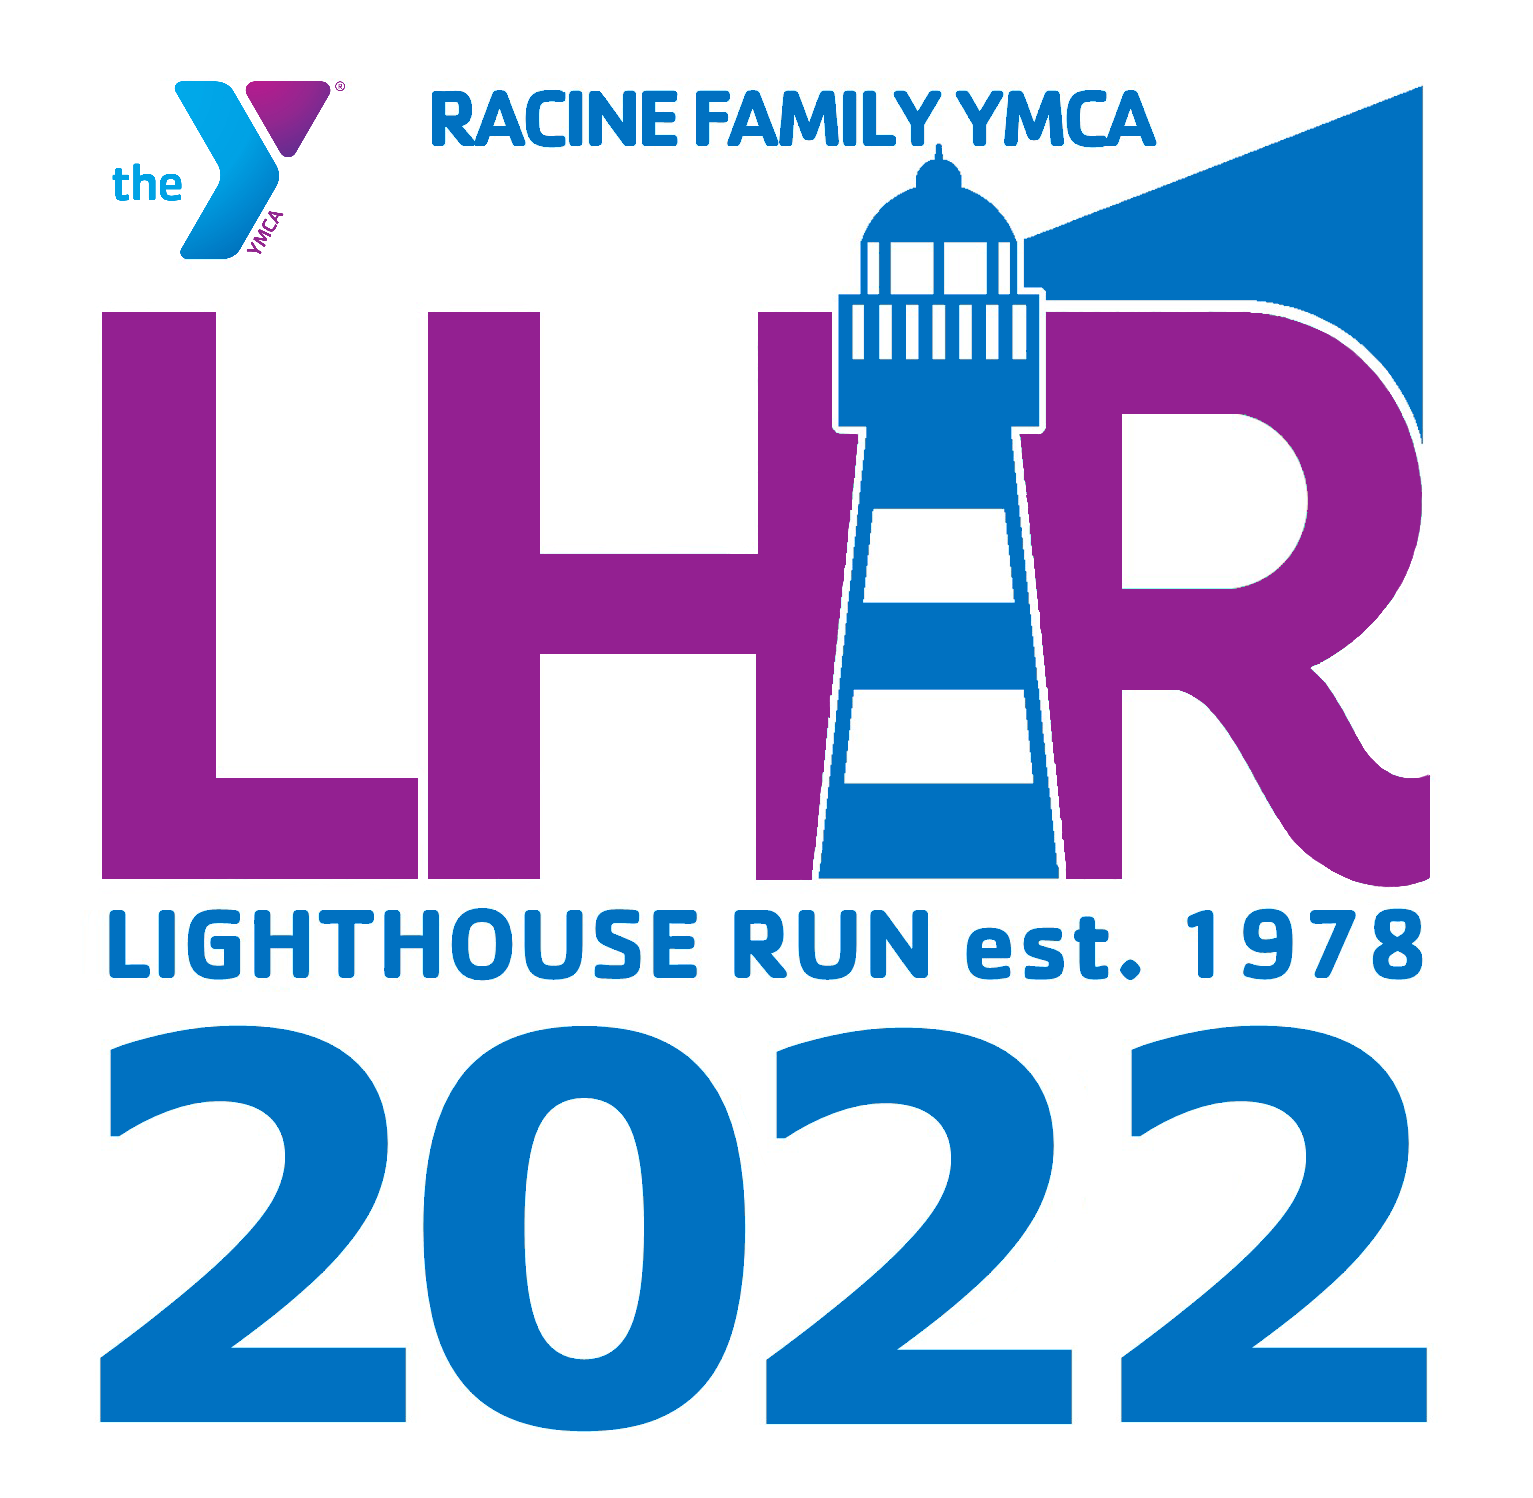 Lighthouse Run Racine Family YMCA